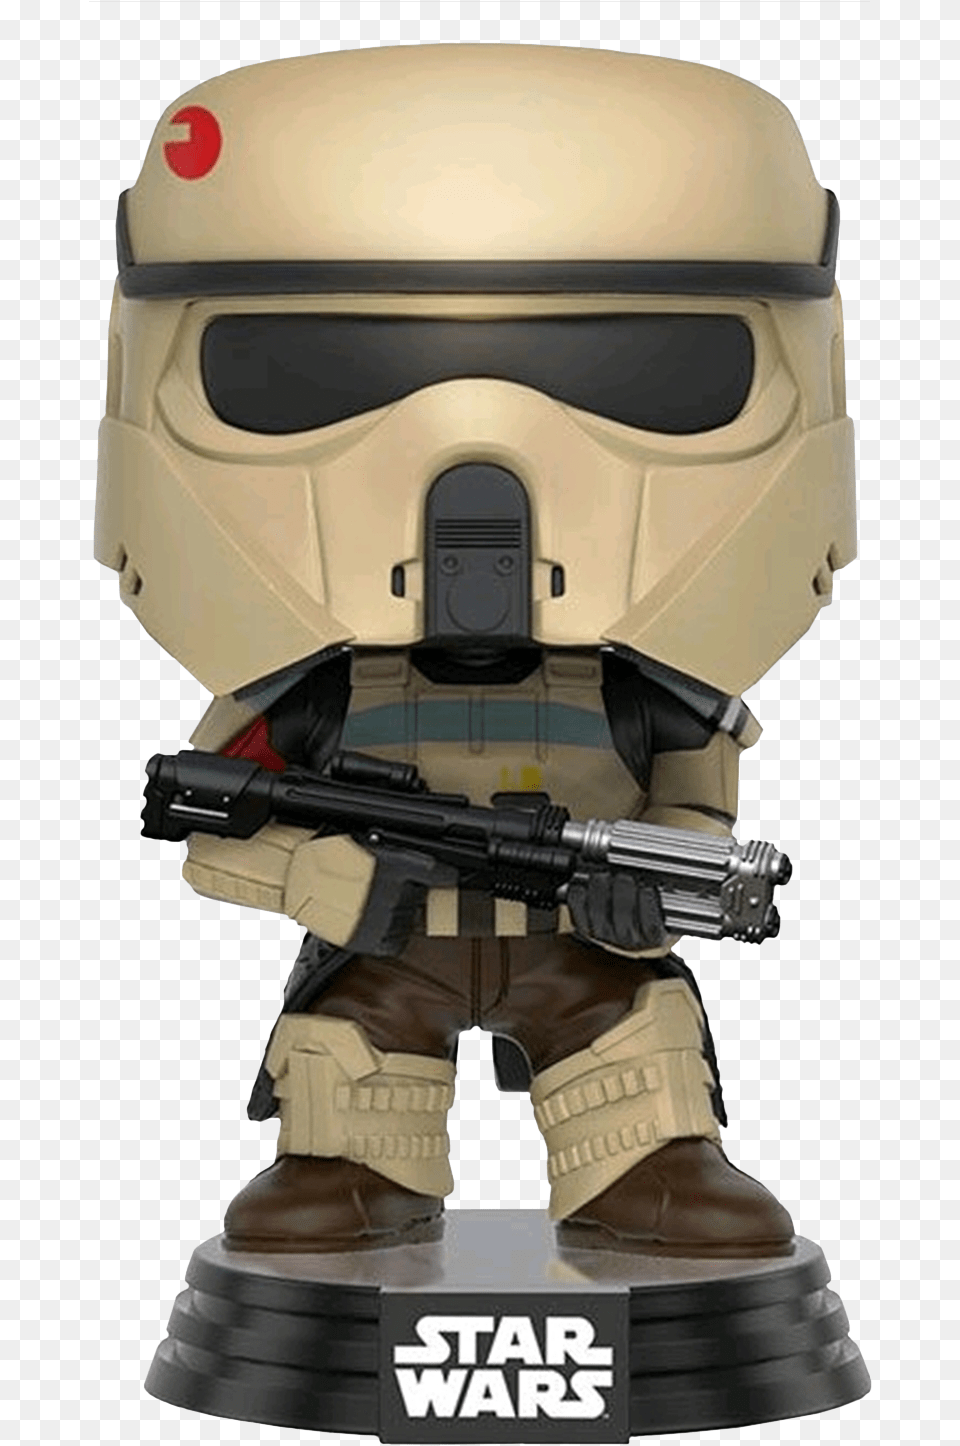 Rogue One Funko Pop Star Wars Shore Trooper, Gun, Weapon, Helmet, Robot Free Png Download